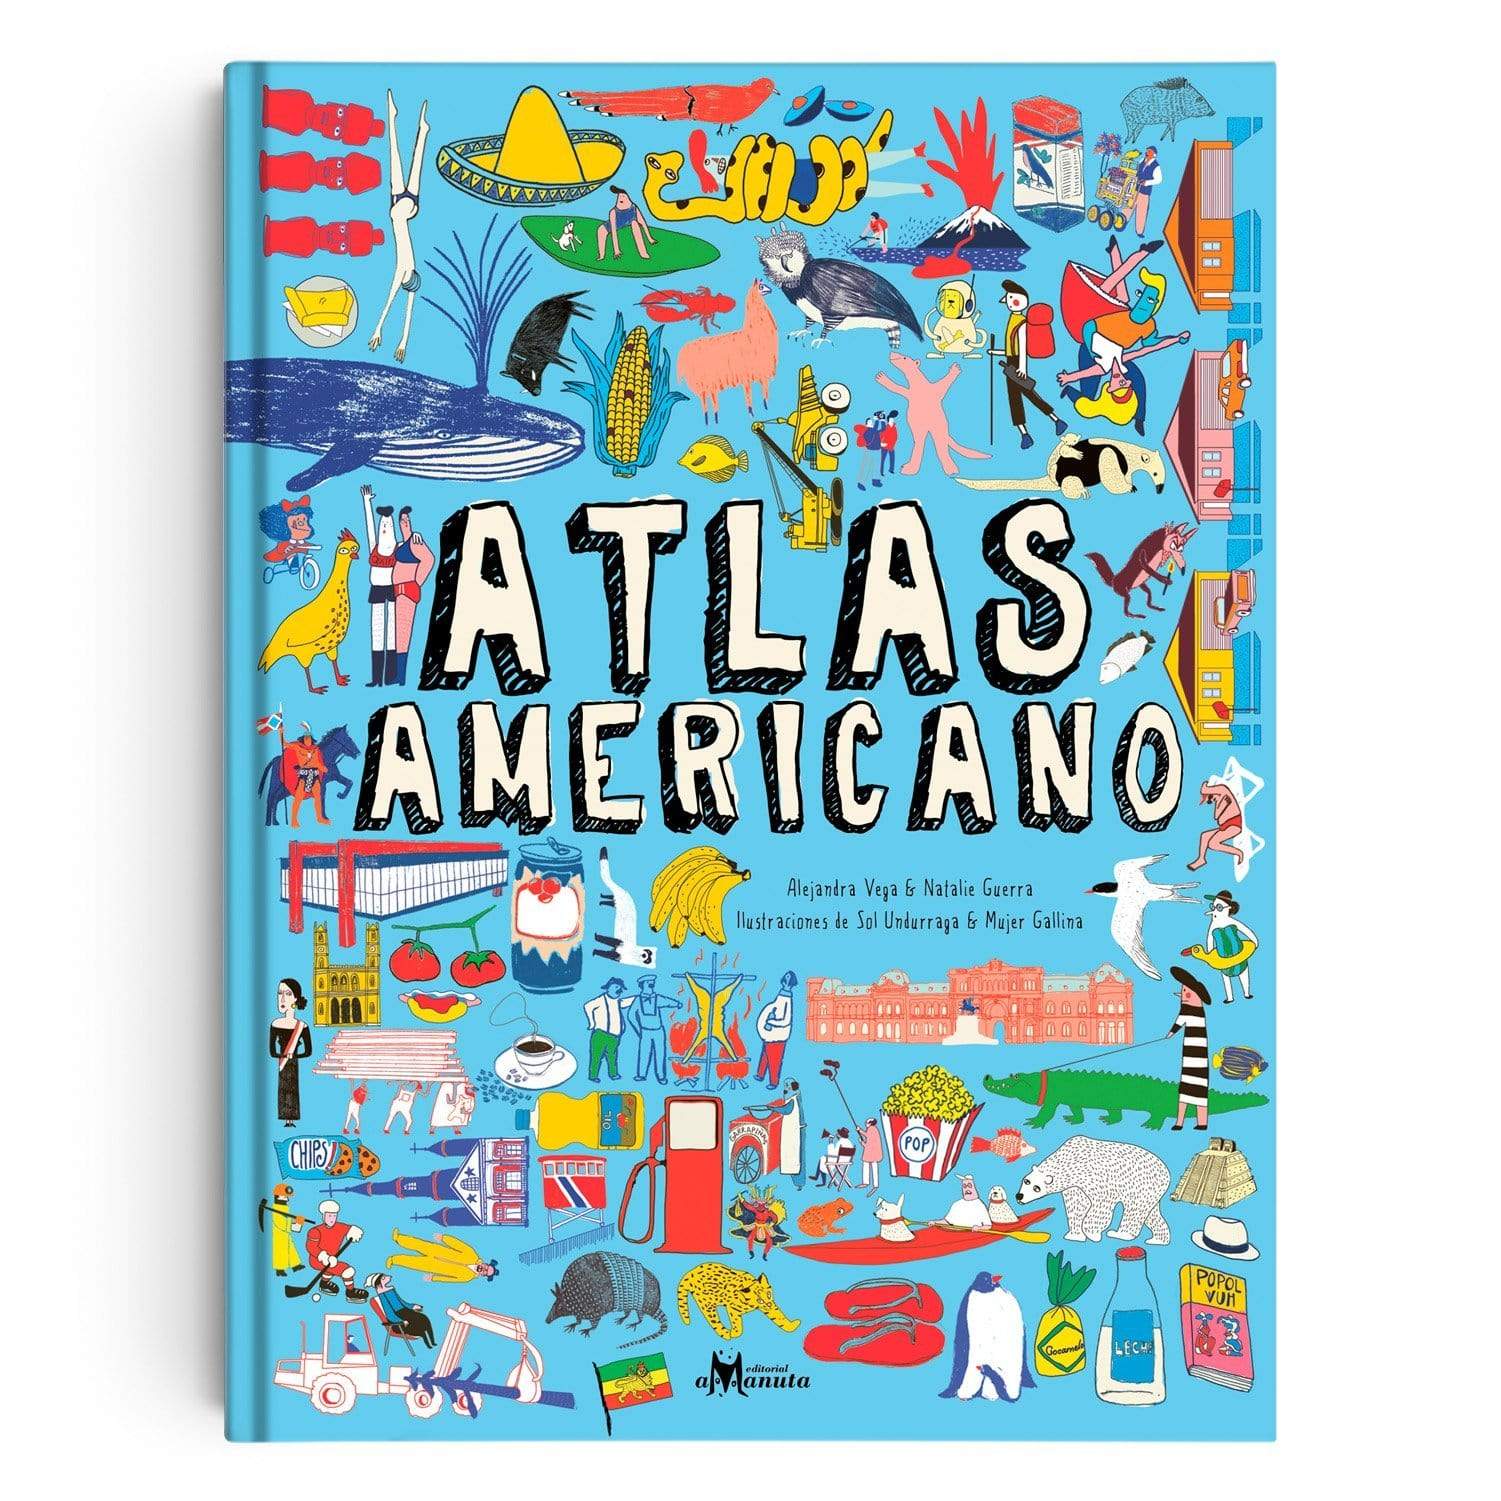 Atlas Americano